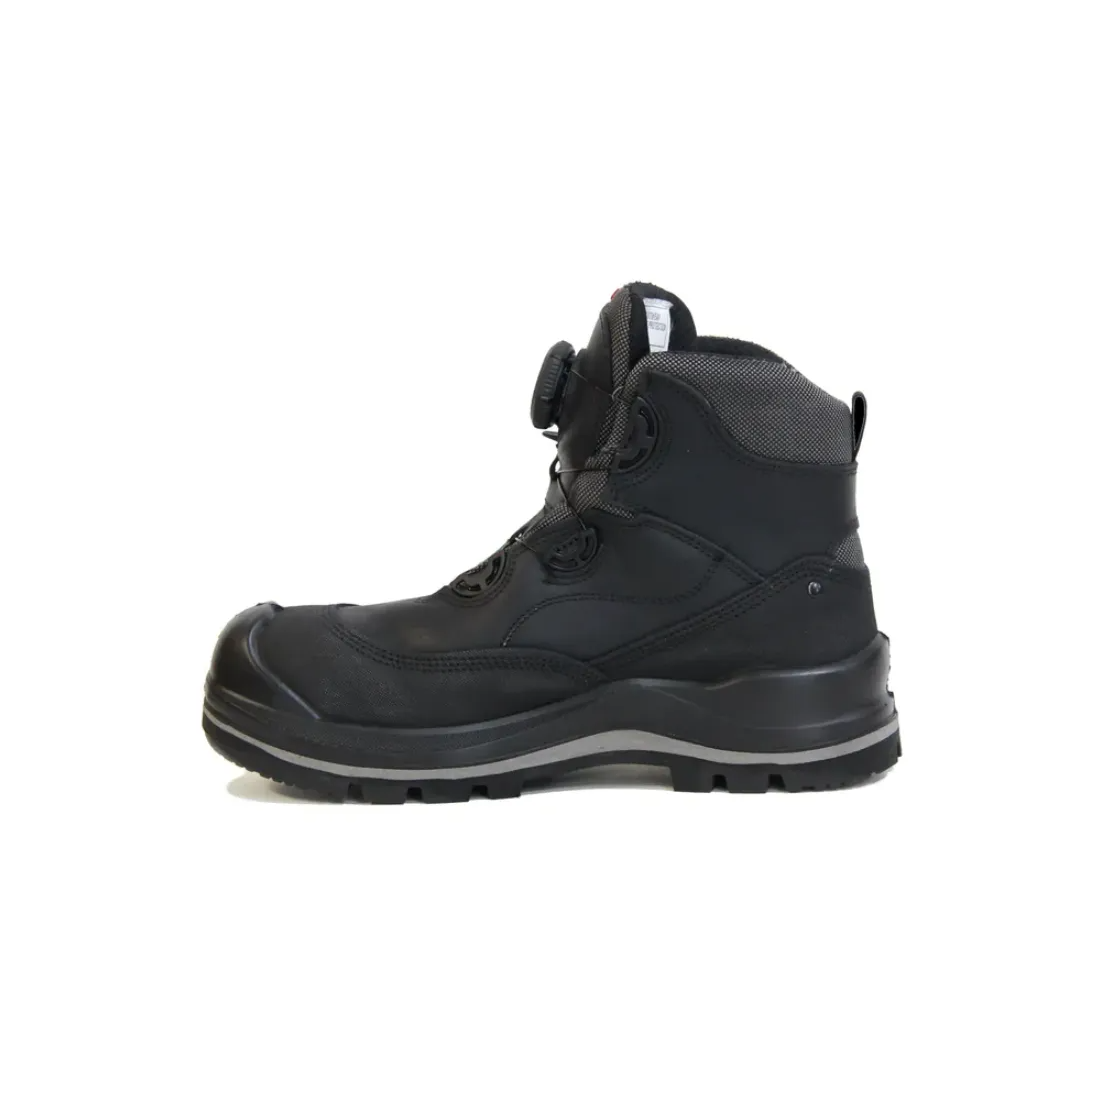 Grisport BOA Wolf WaterProof Safety Boots - Black